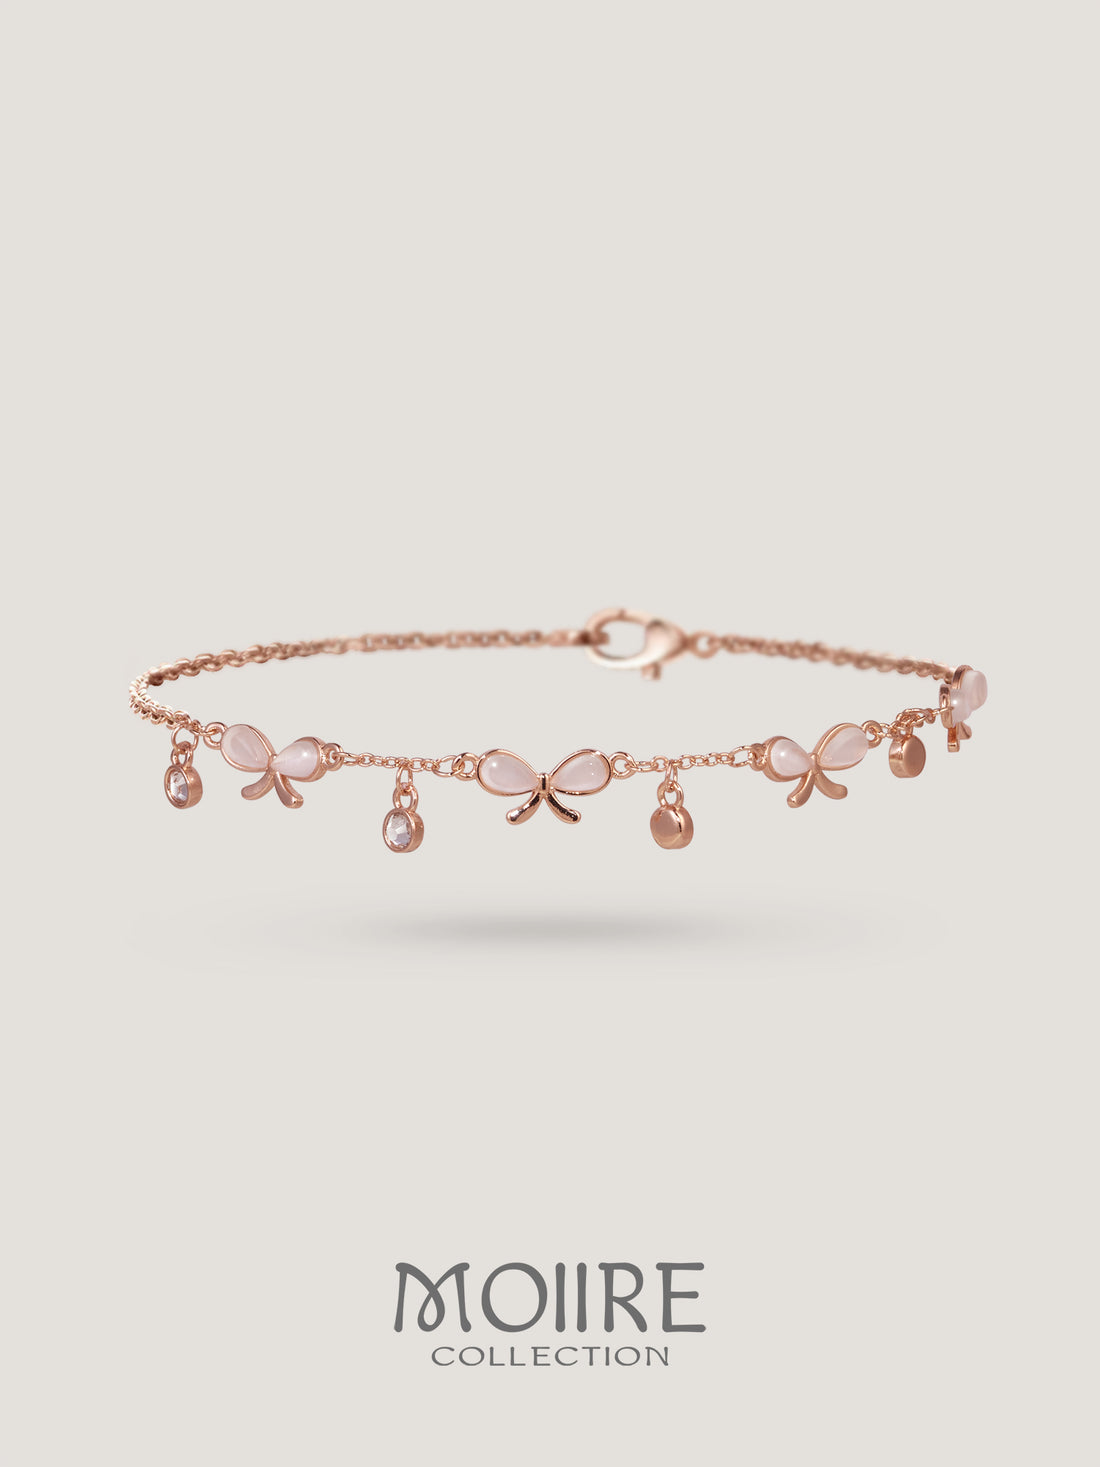 Moiire Jewelry | 漫漫相伴